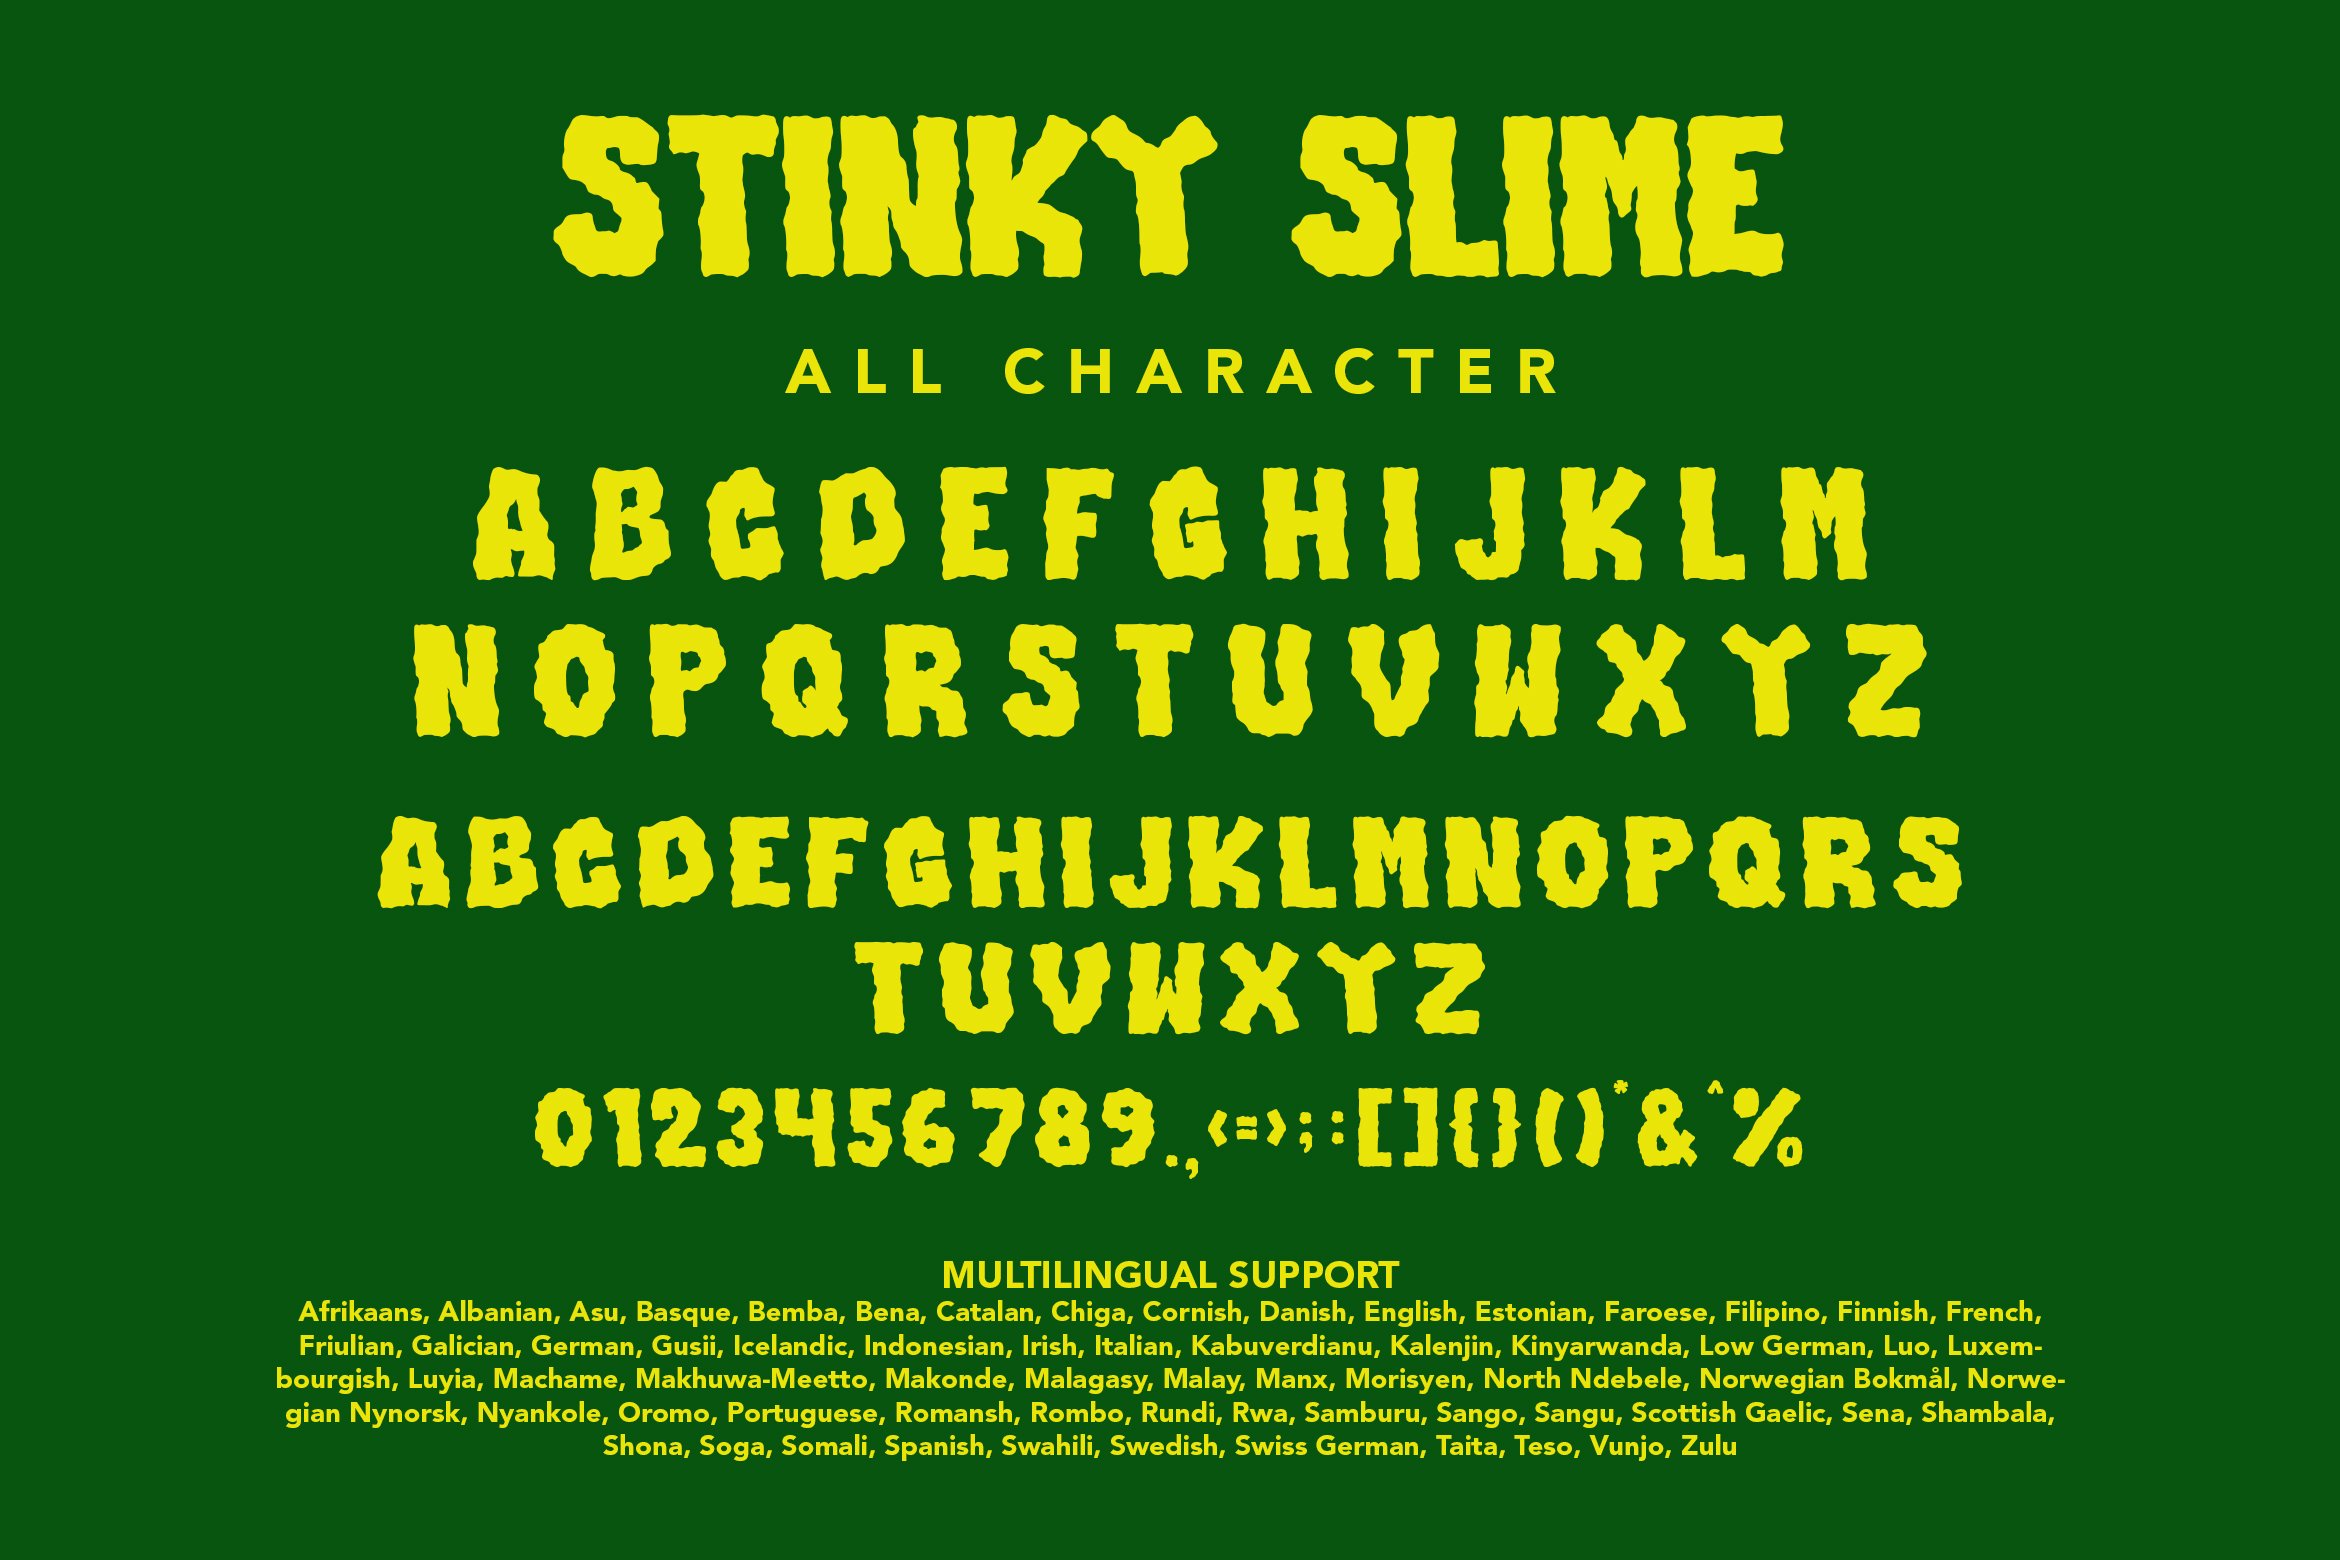 stinky slime 7 315